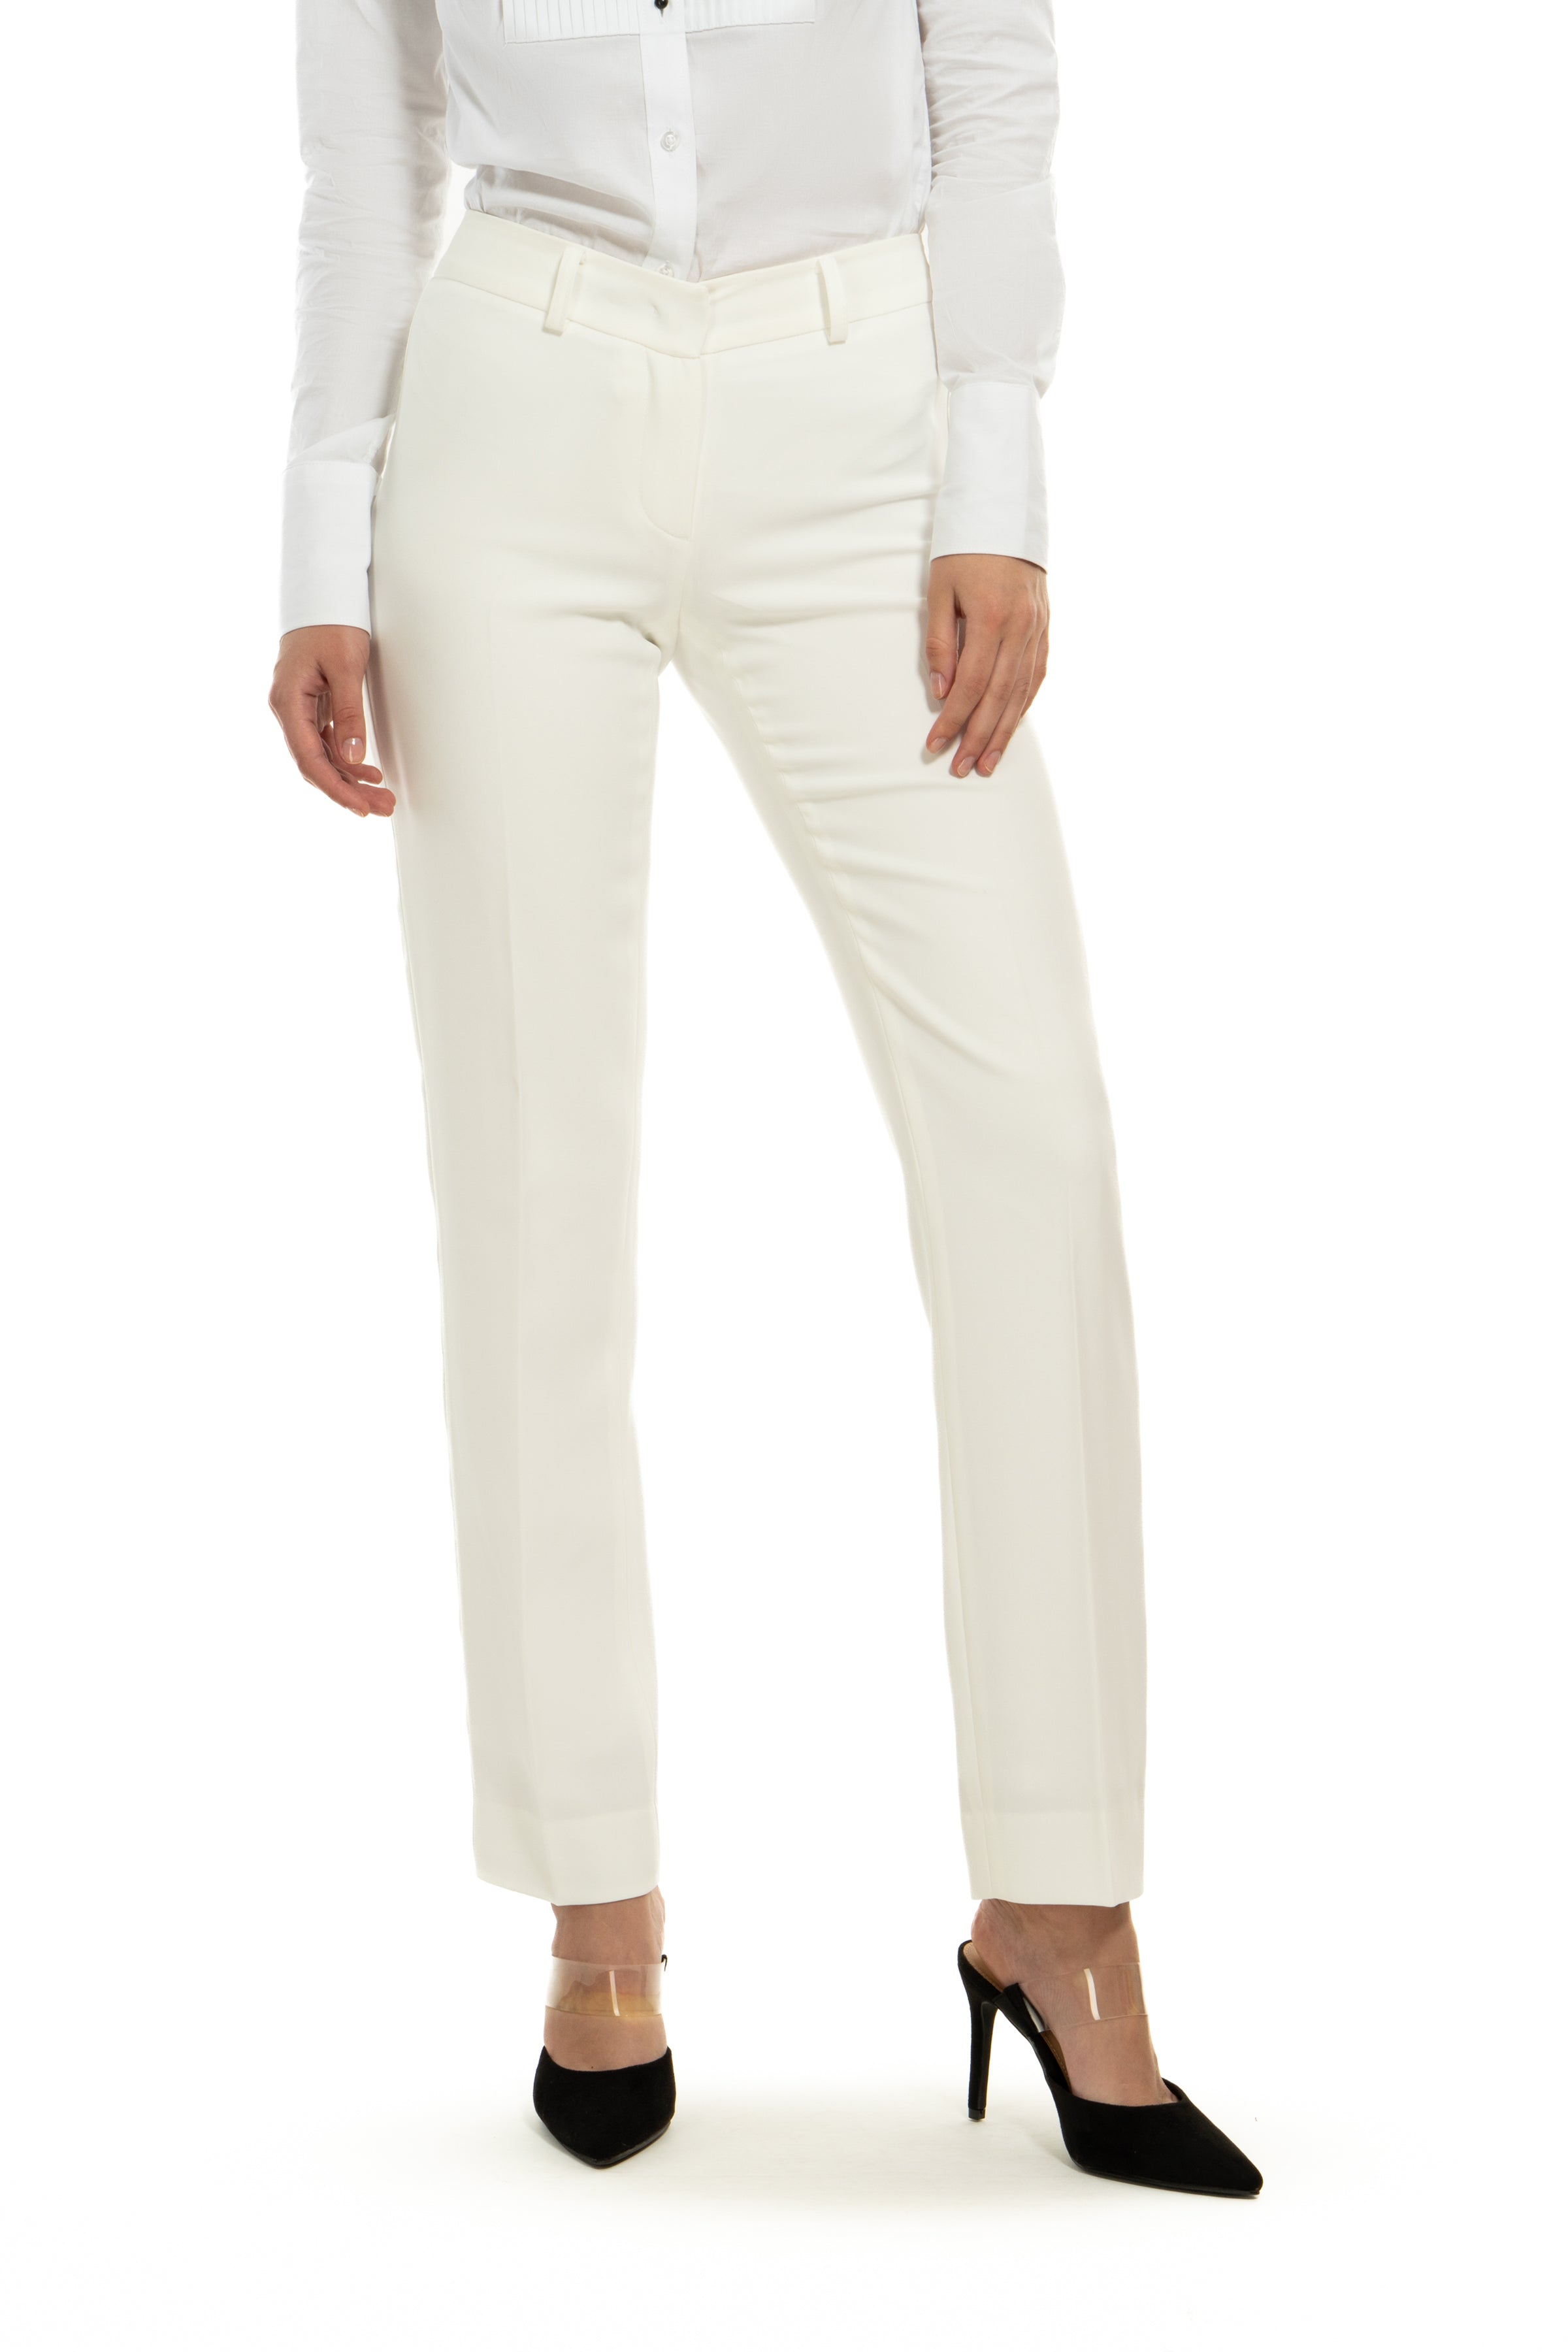 Pearl White Slim Fit Tuxedo Pants w/ Satin Back Pocket